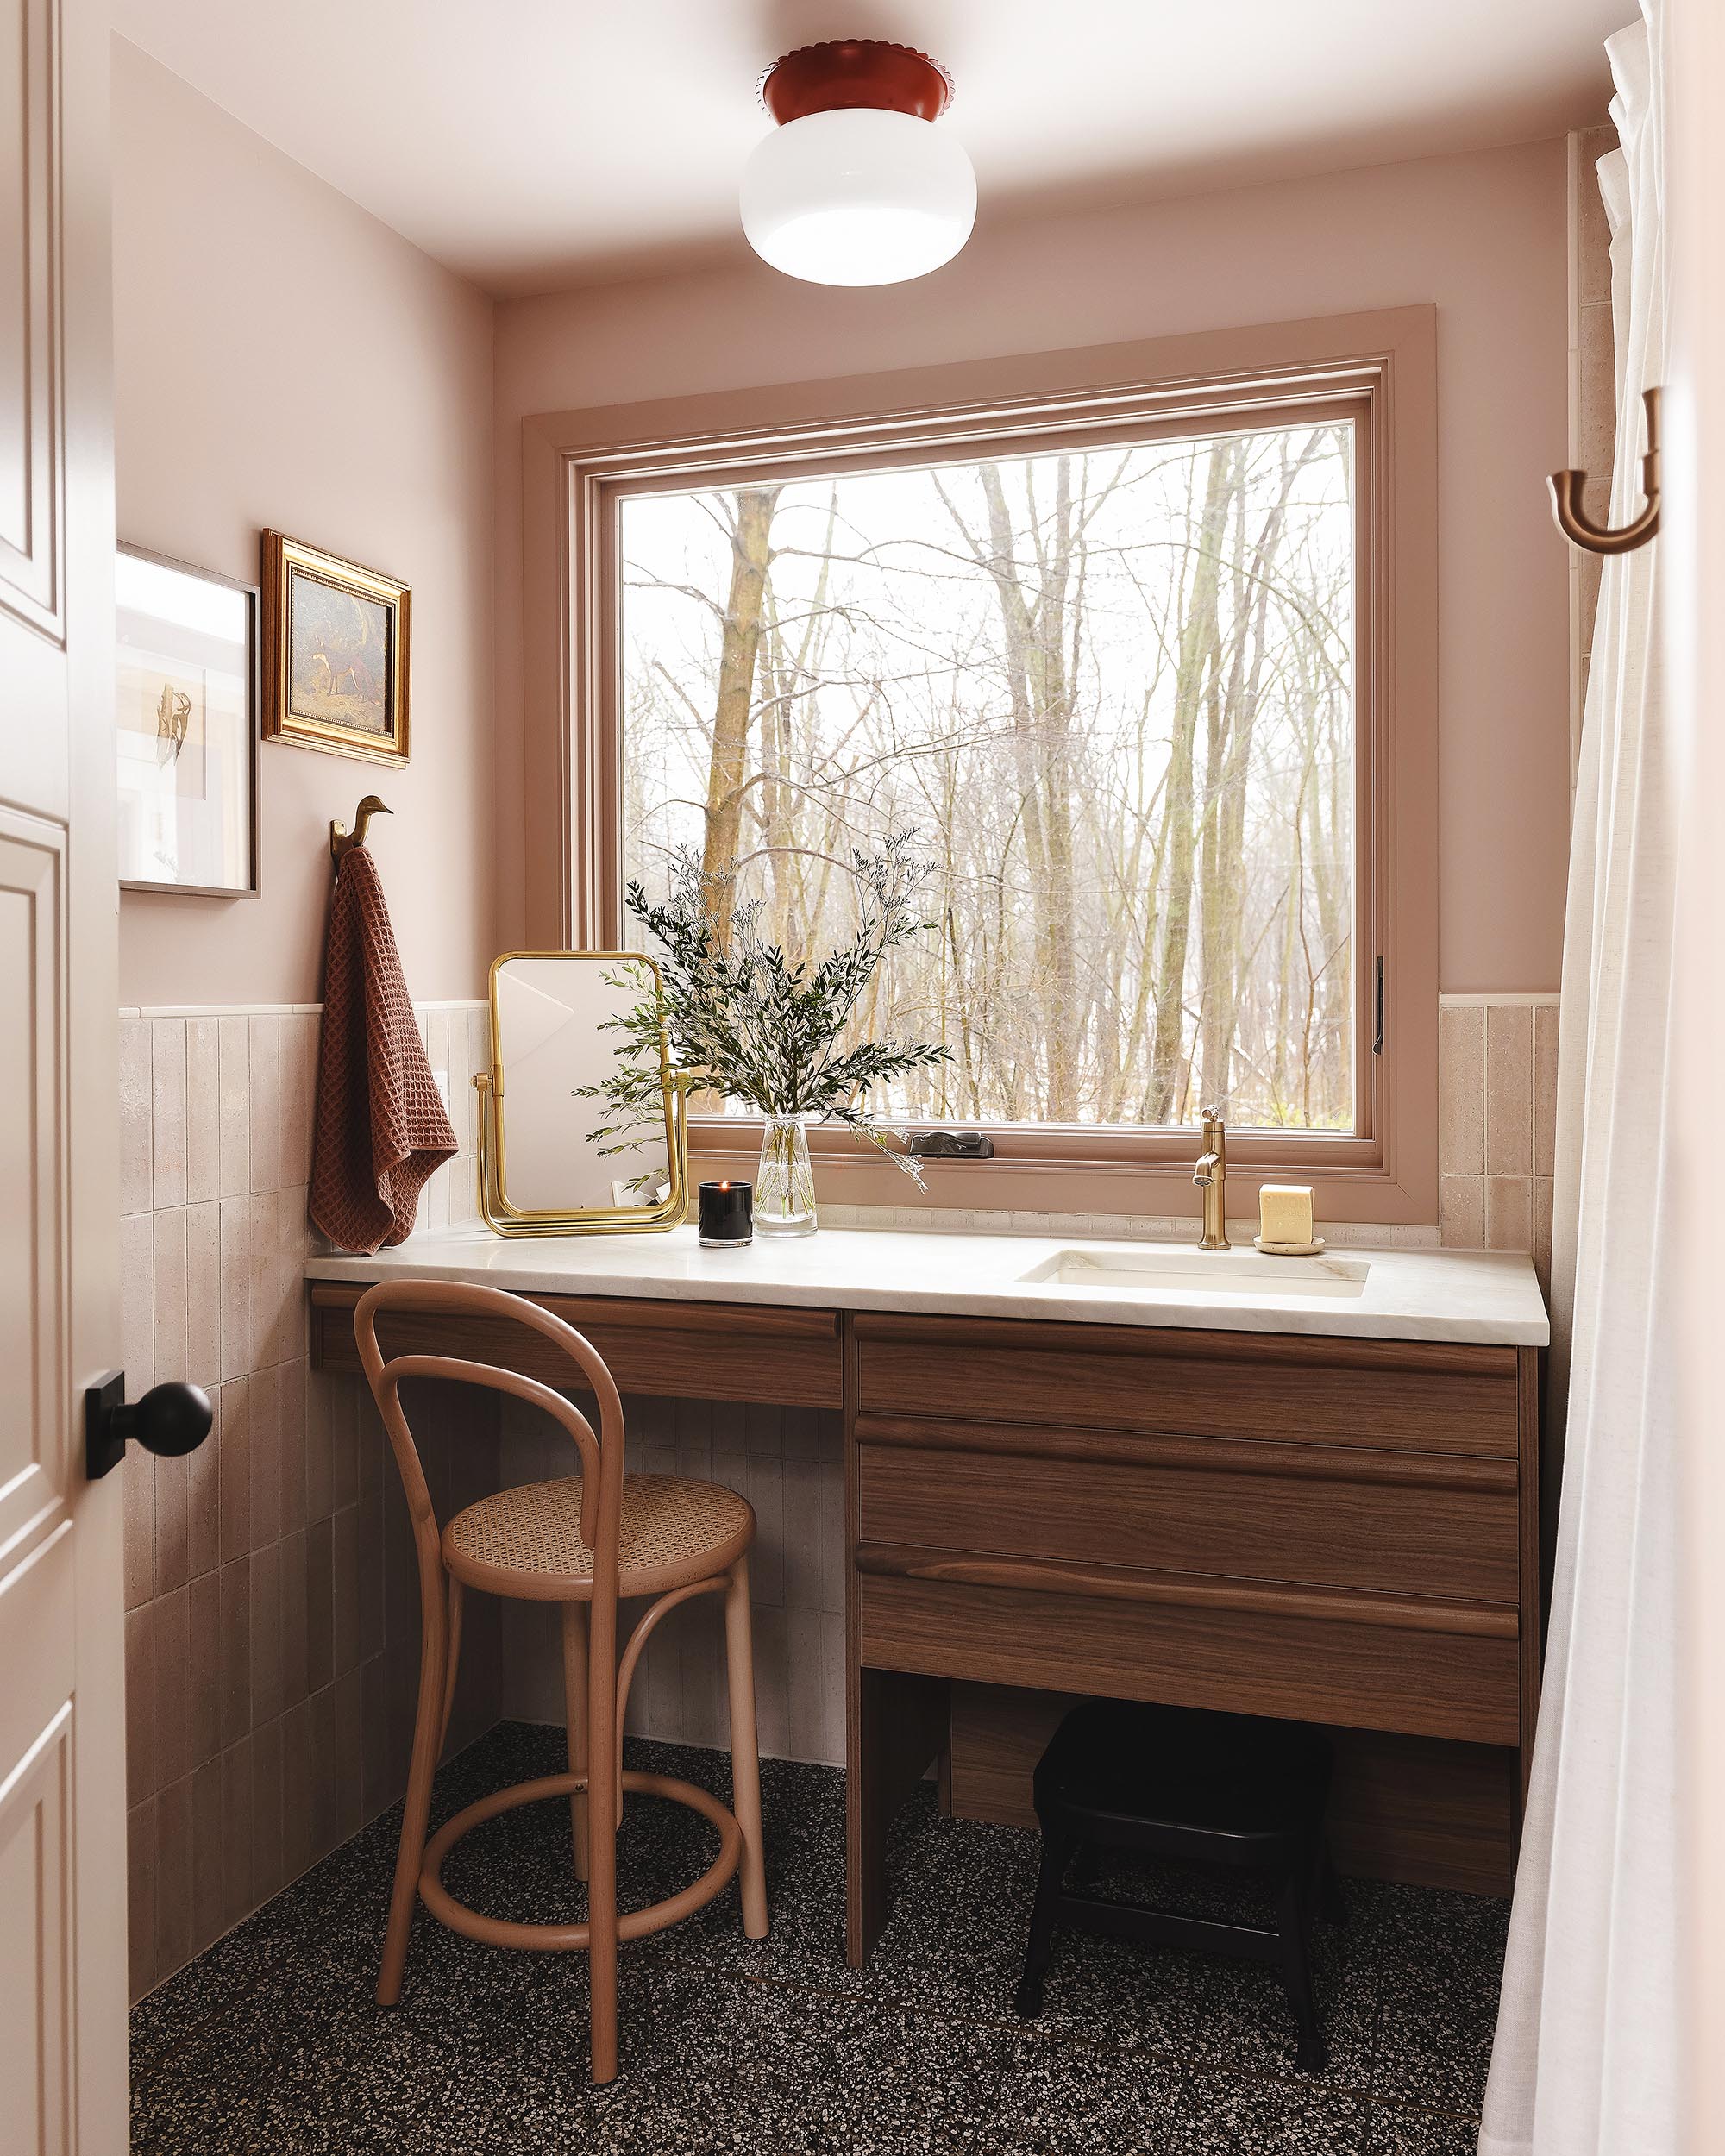 Vanity in a pink bathroom, walnut wood, terrazzo floors | via Yellow Brick Home